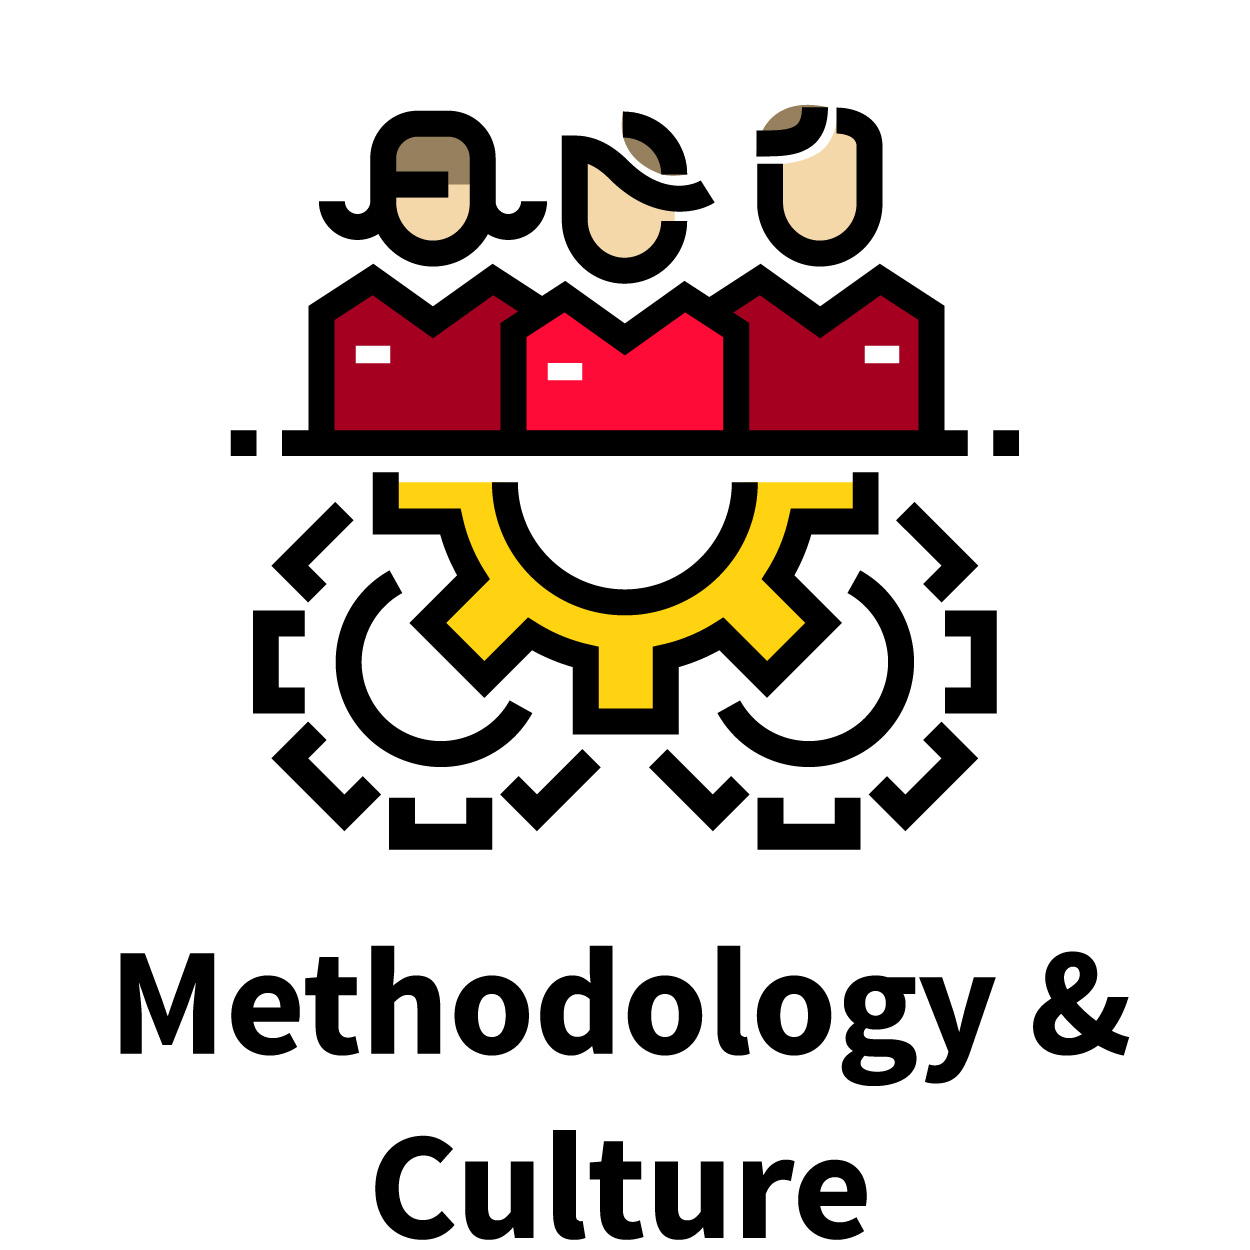 Methodology & Culture